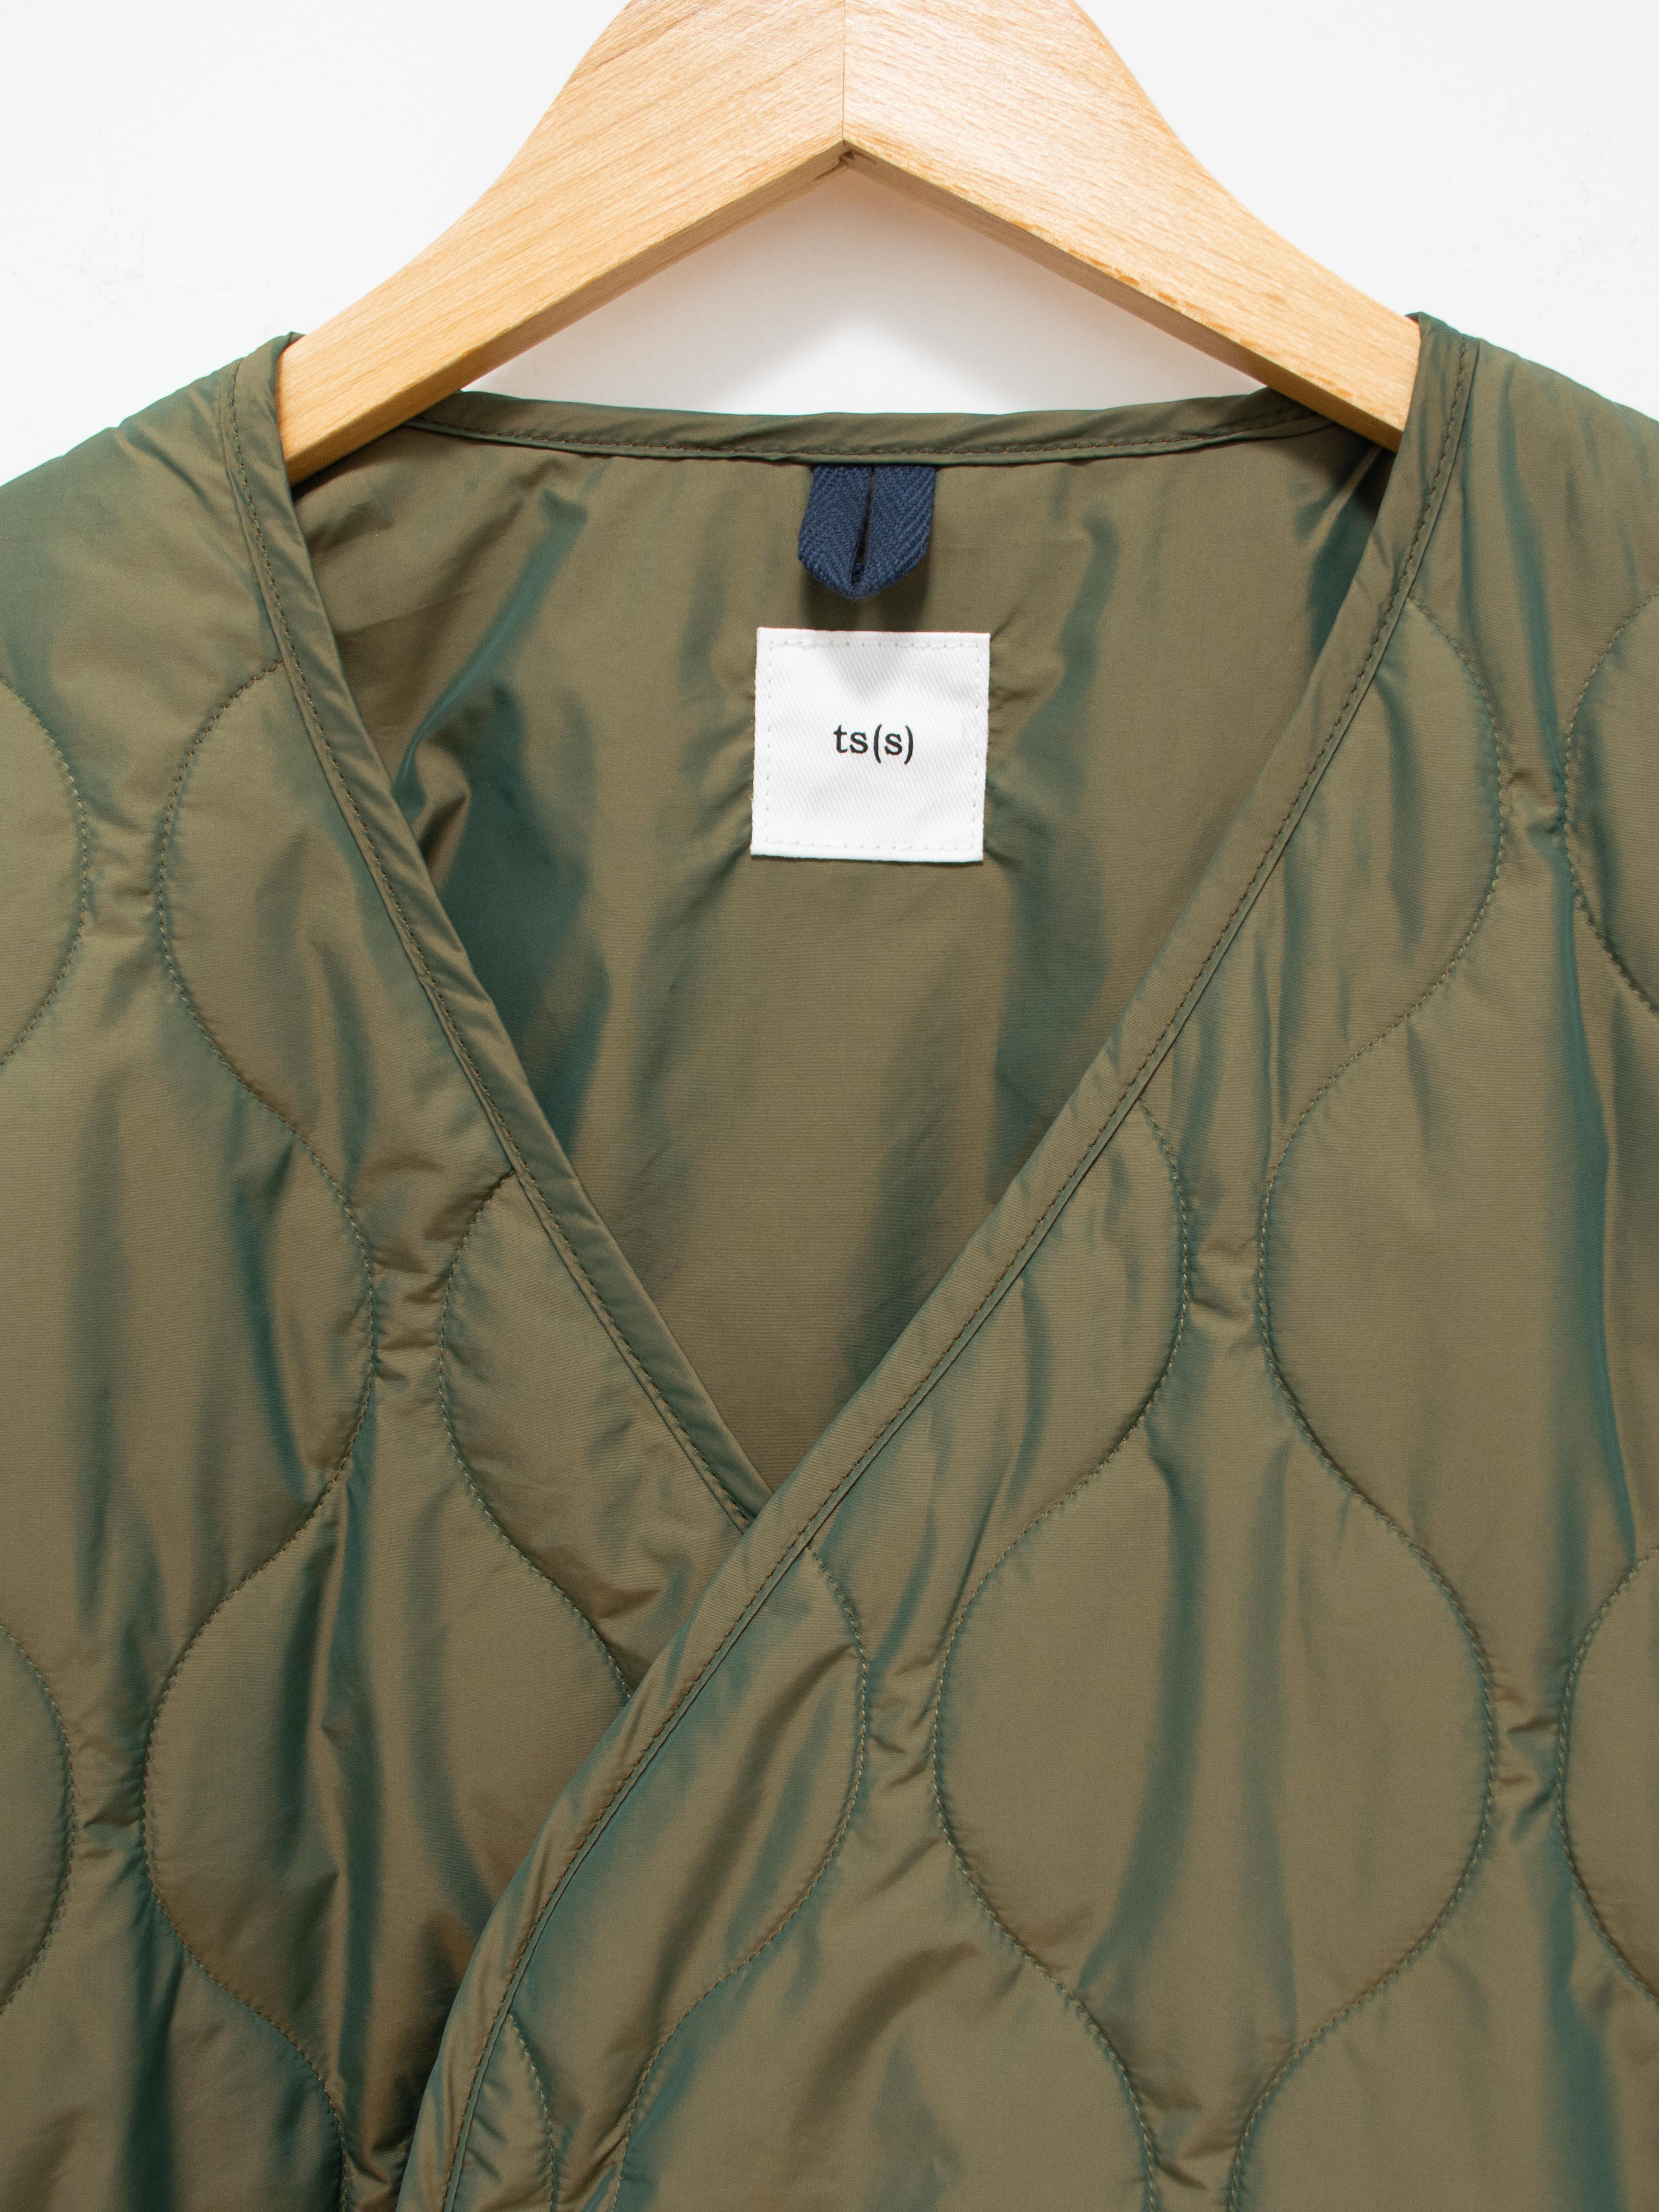 Namu Shop - ts(s) Lightweight Taffeta Quilted Liner Buckle Jacket - Olive